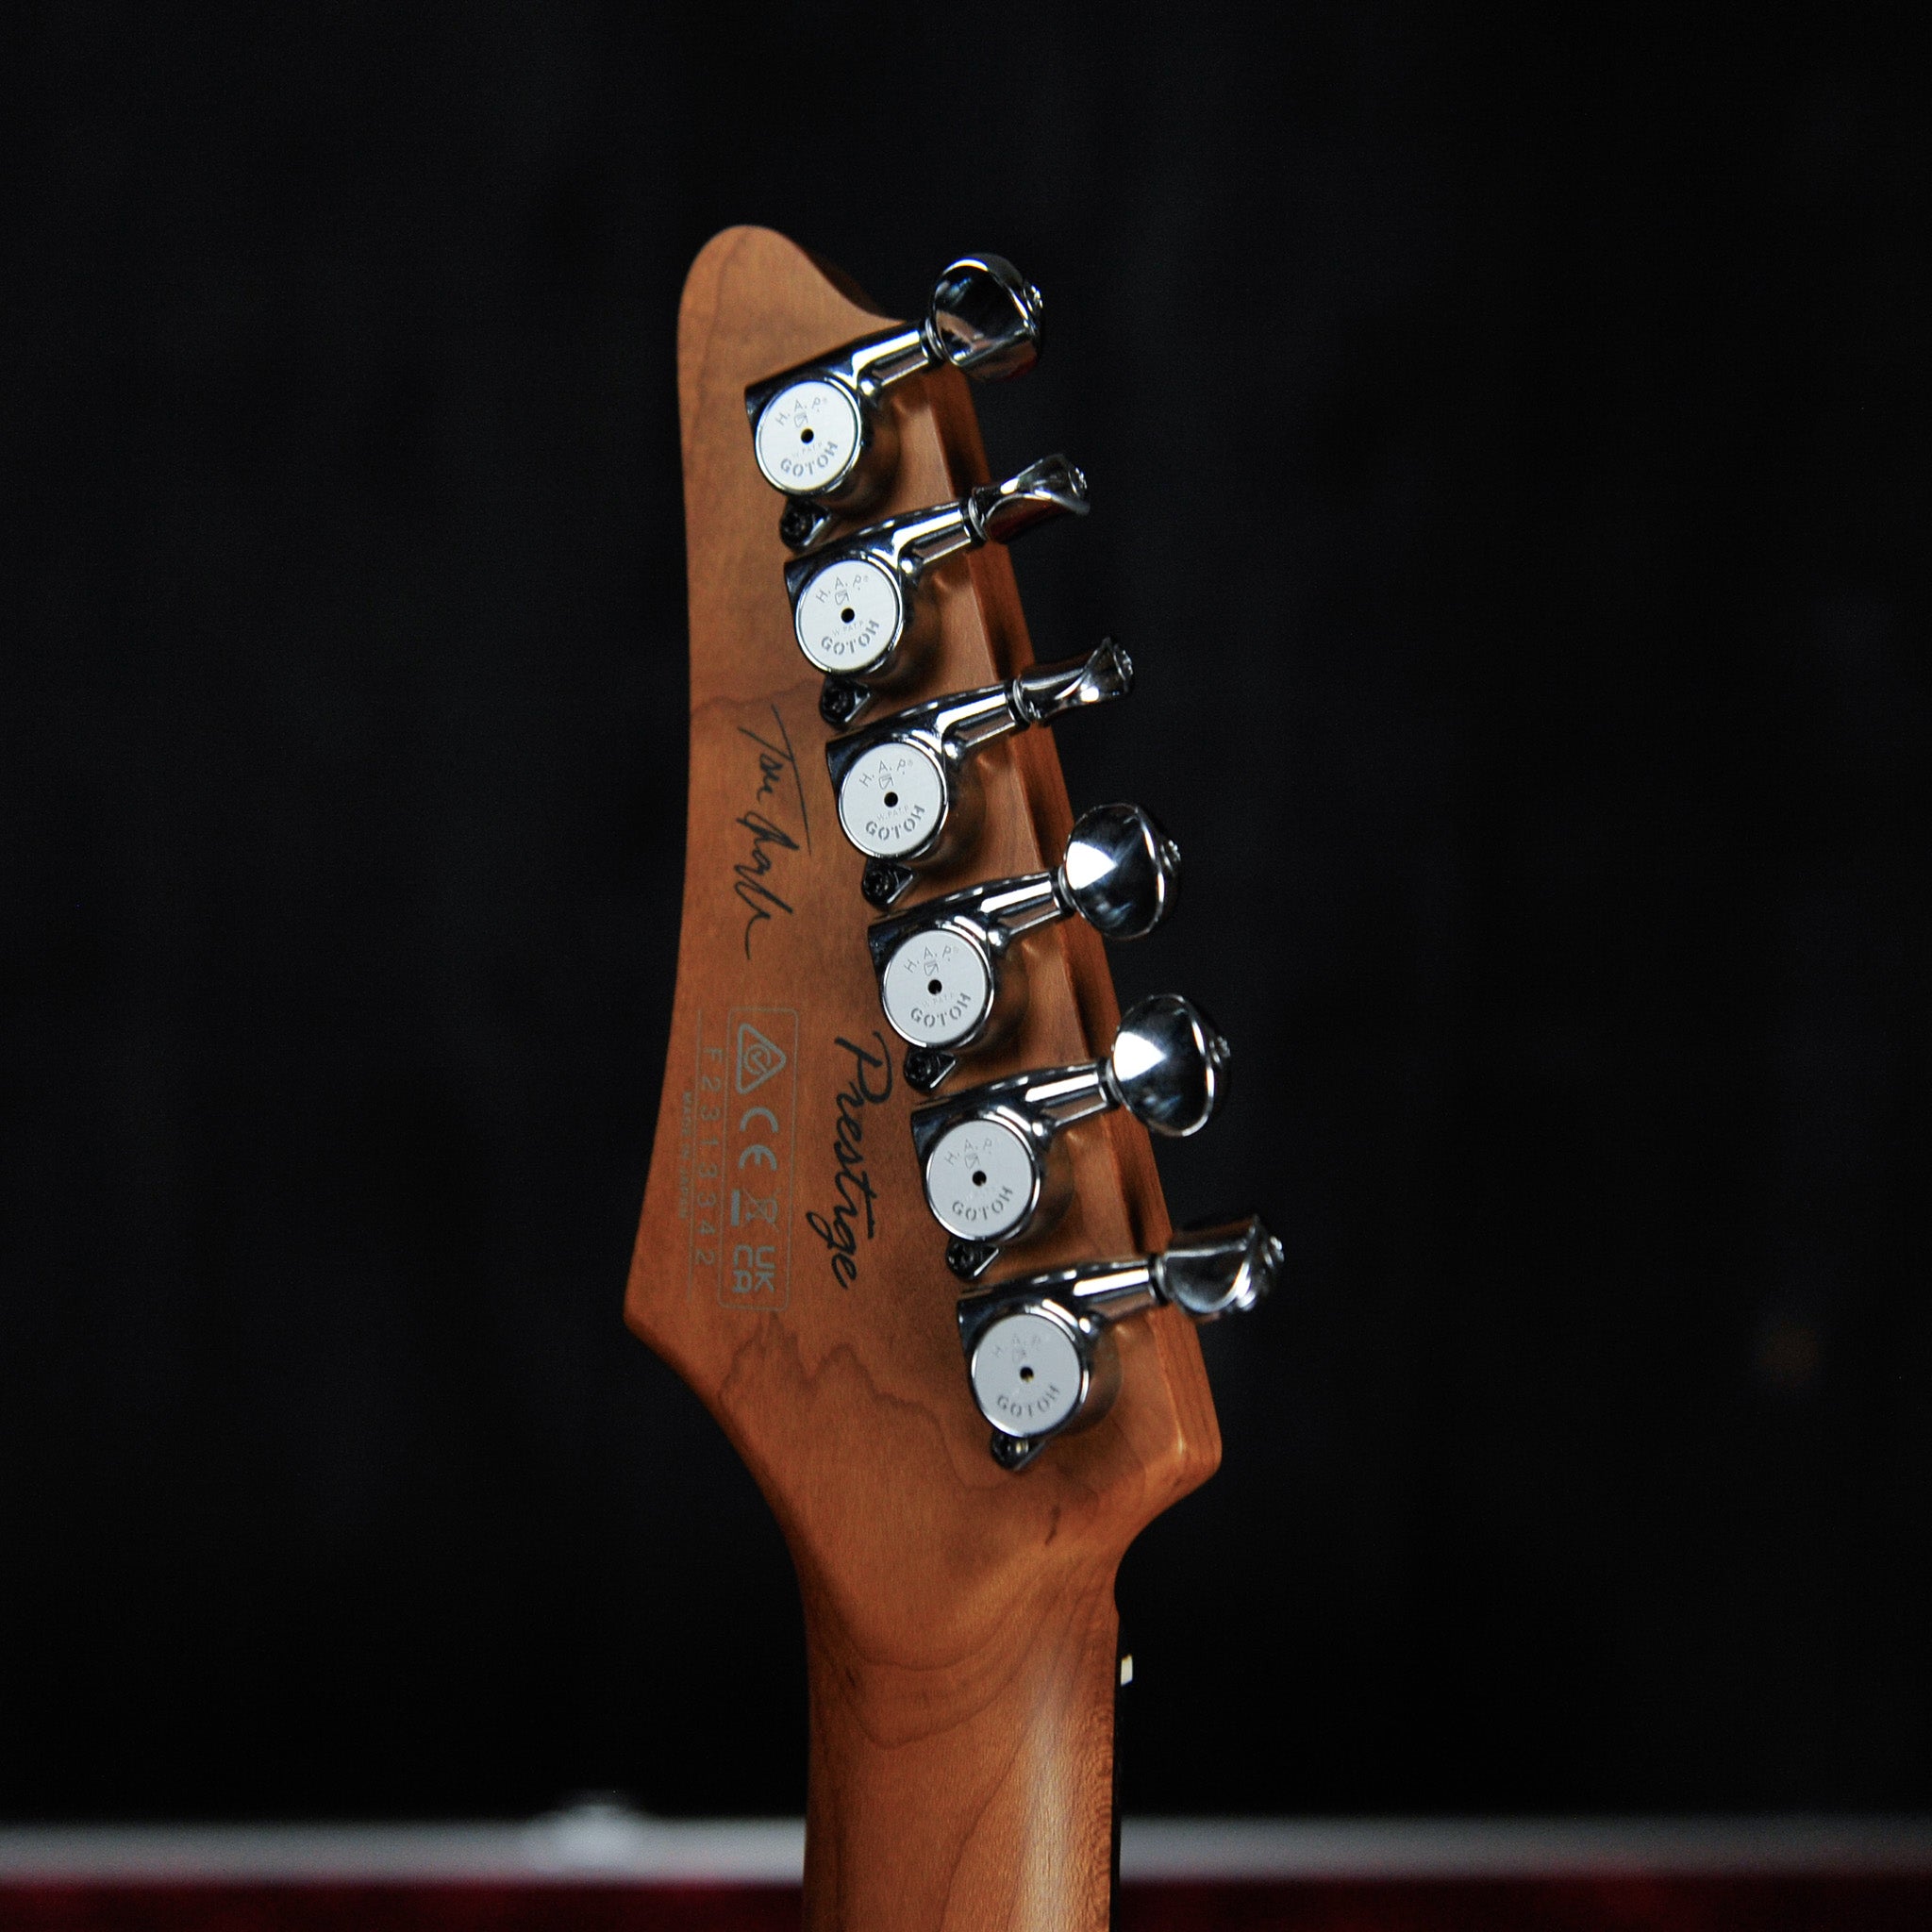 Ibanez TQMS1 Tom Quayle AZS Signature Electric Guitar (Celeste Blue) - Used